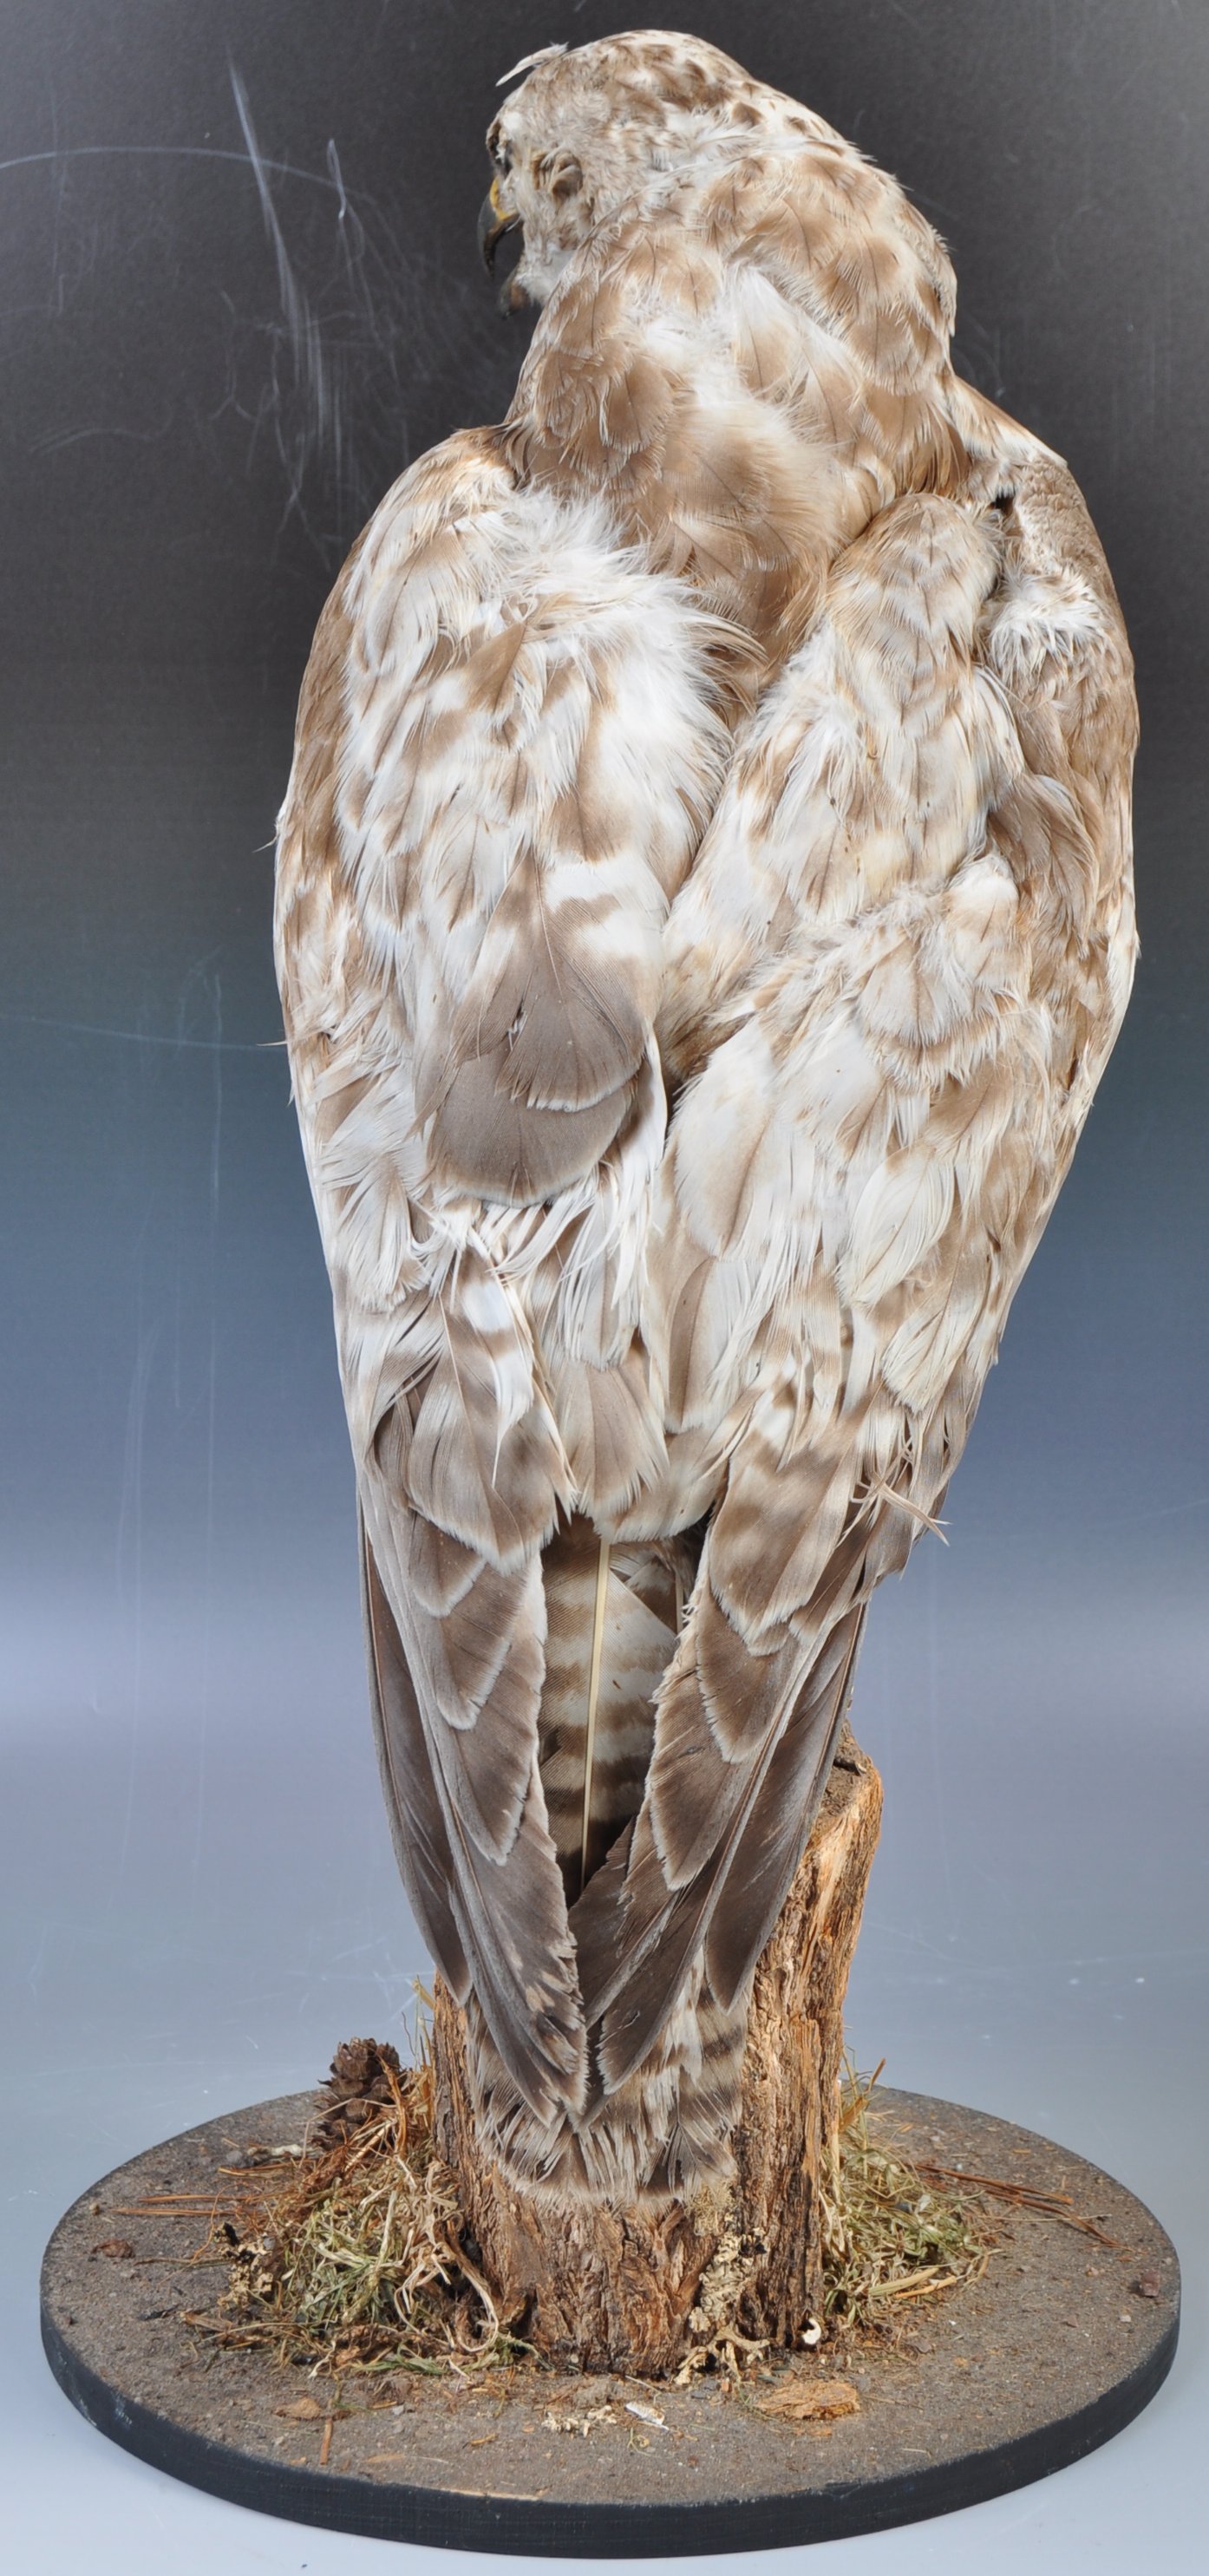 ANTIQUE TAXIDERMY EXAMPLE OF A BUZZARD BIRD - Image 3 of 6